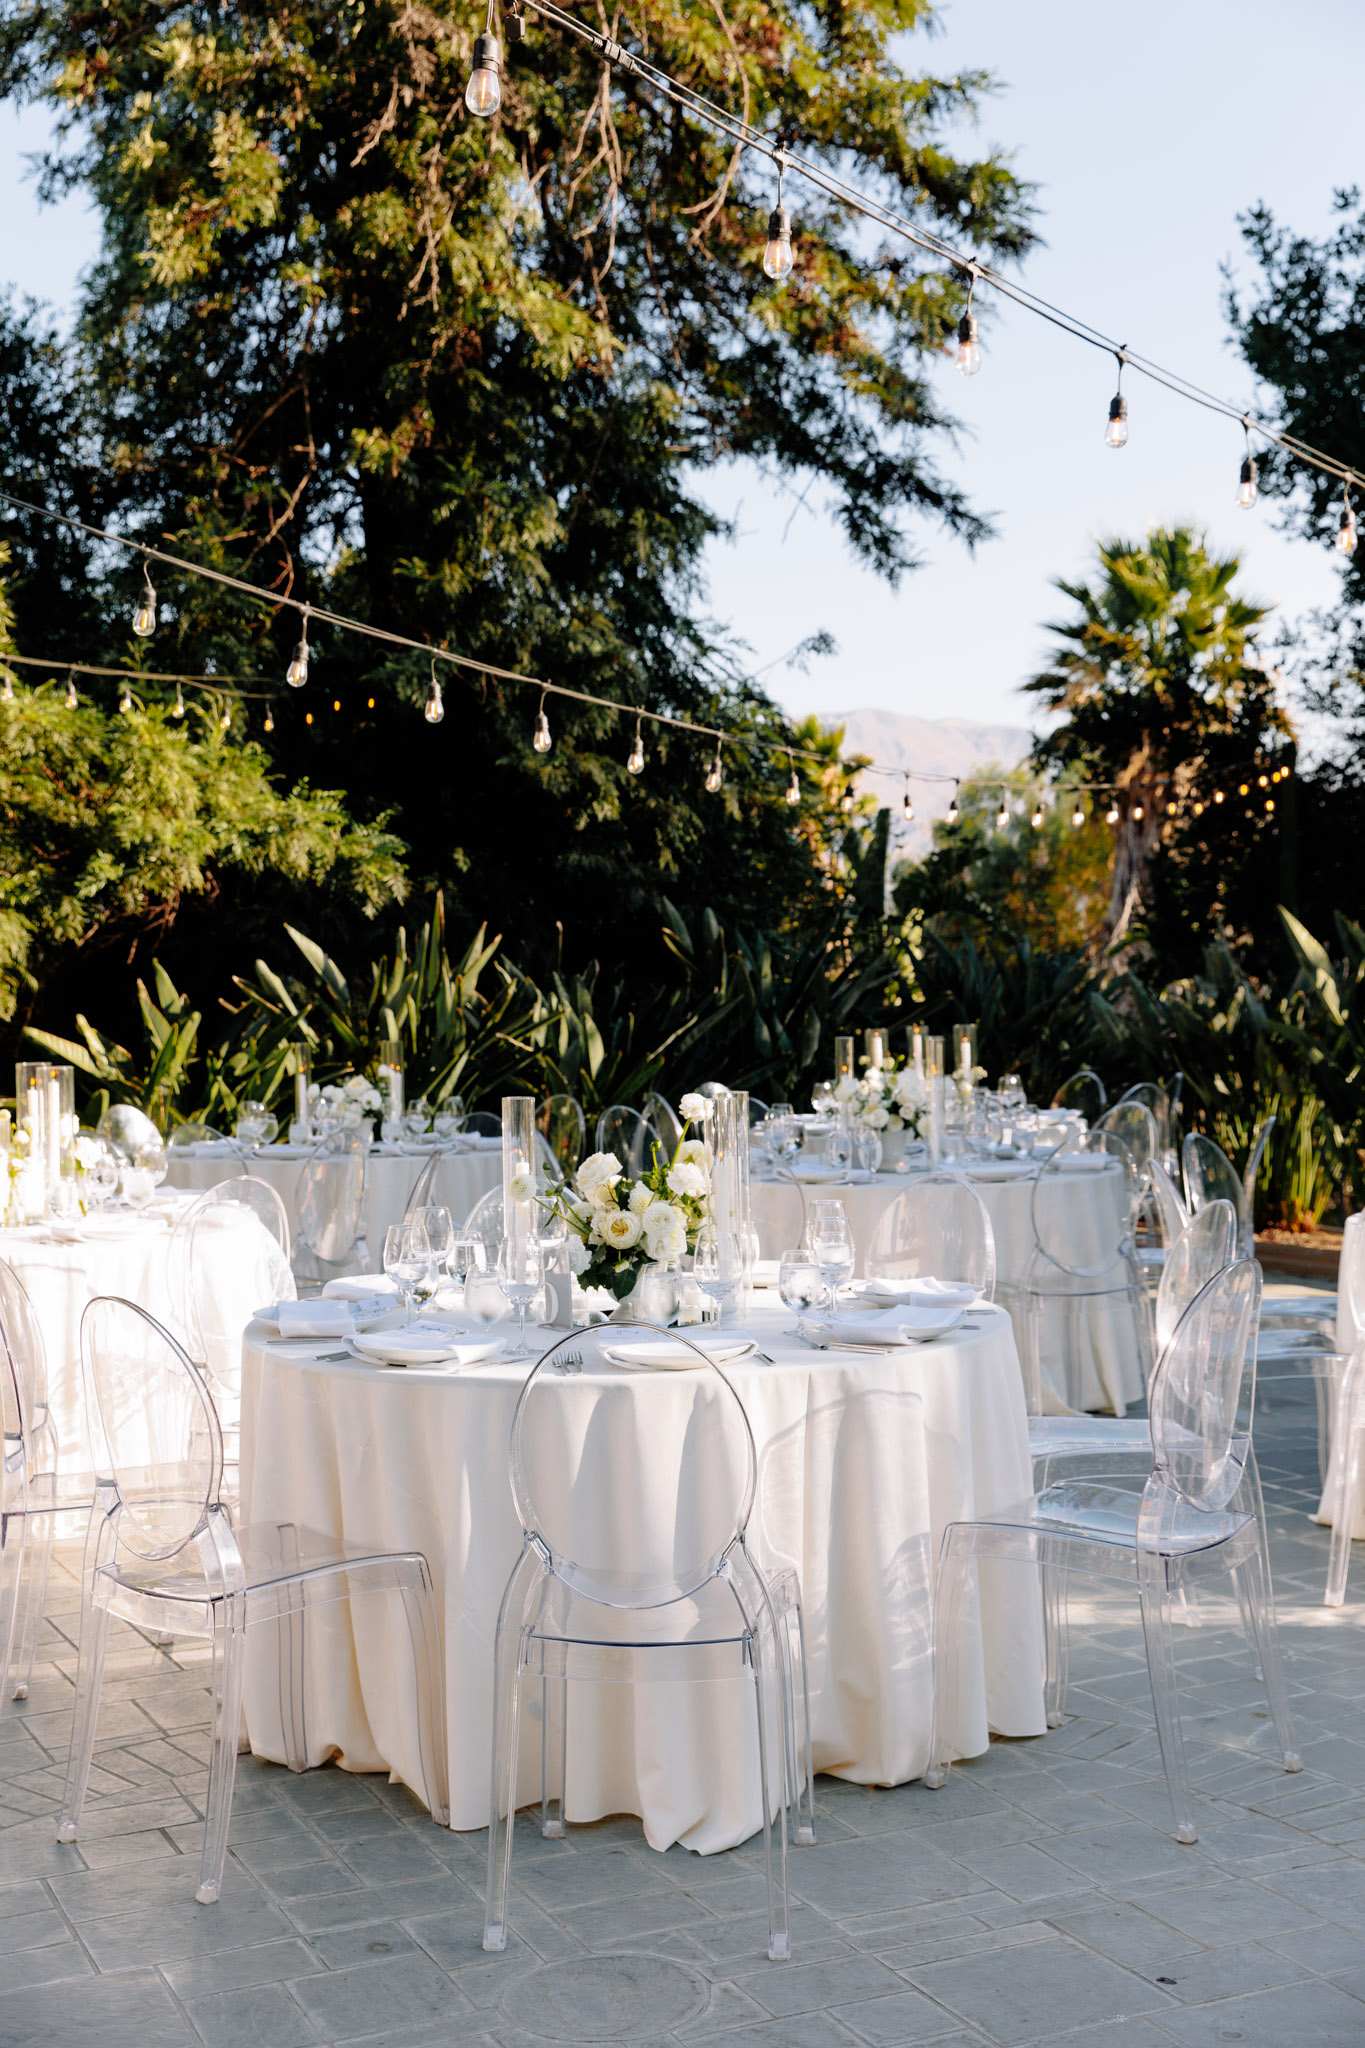 Newhall Mansion wedding venue; wedding venues near Los Angeles